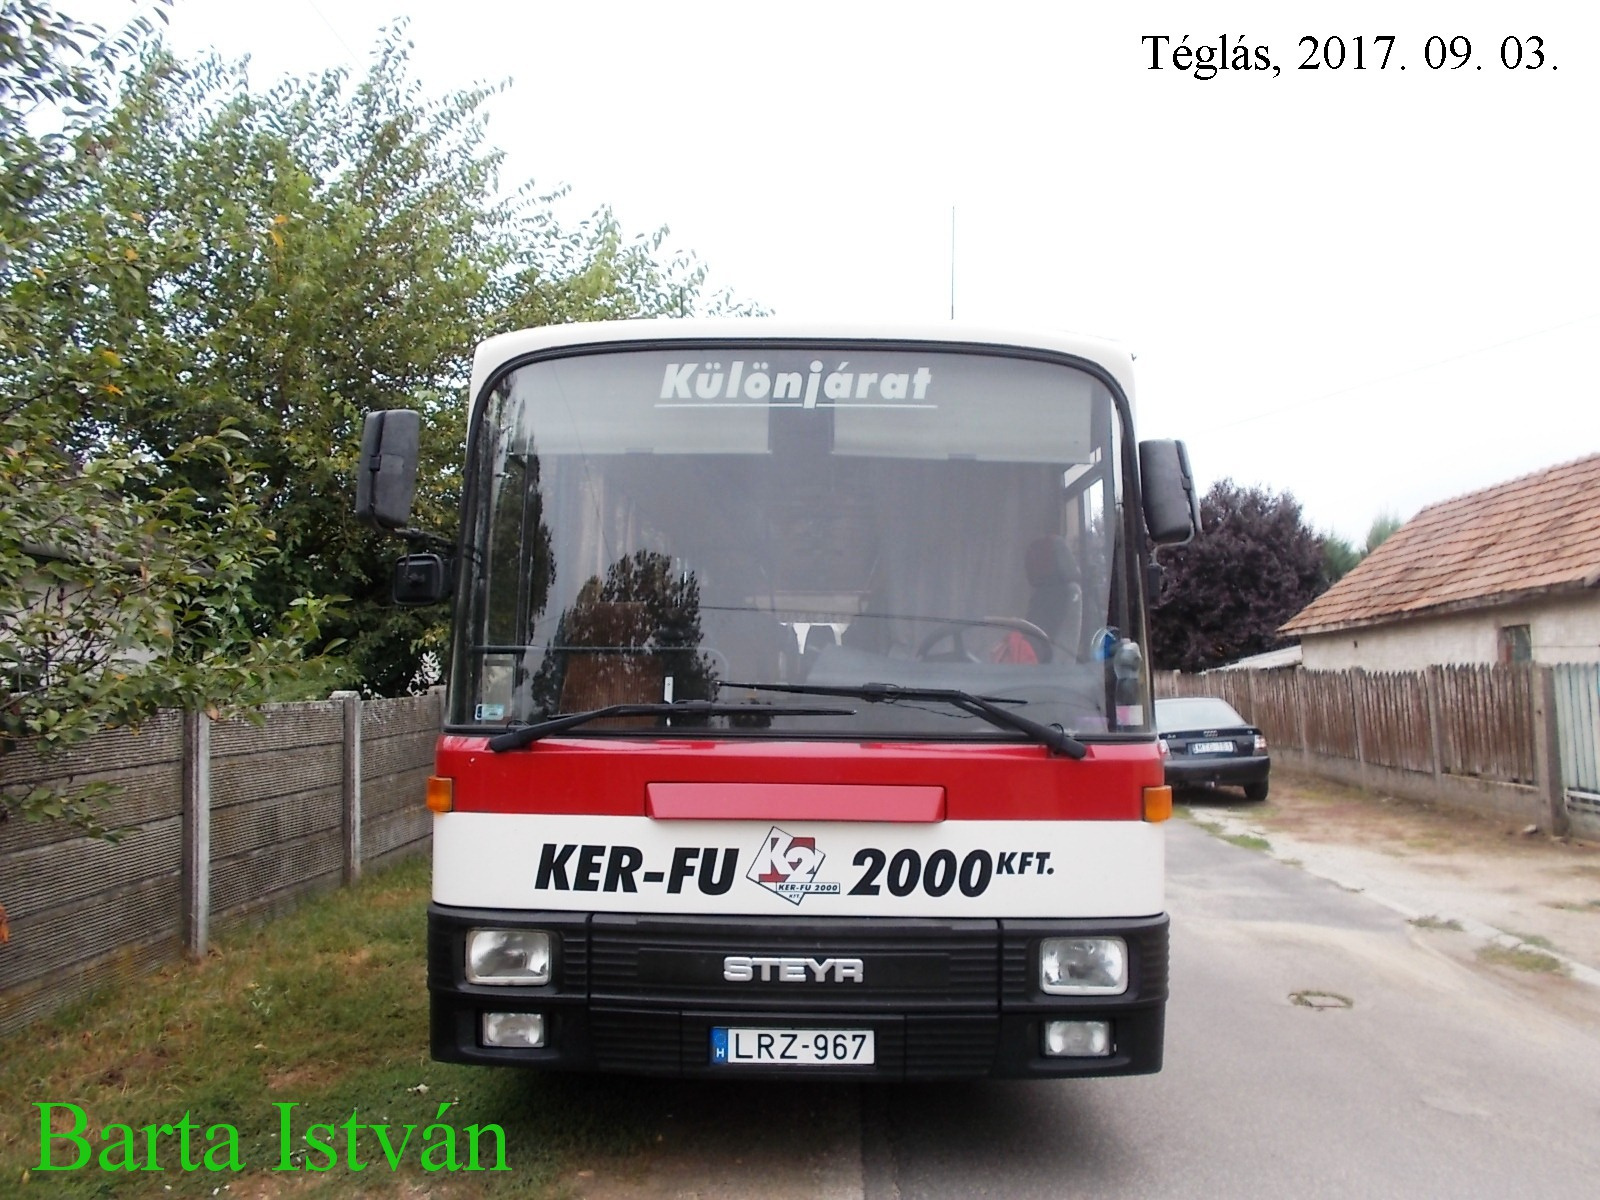 LRZ-967